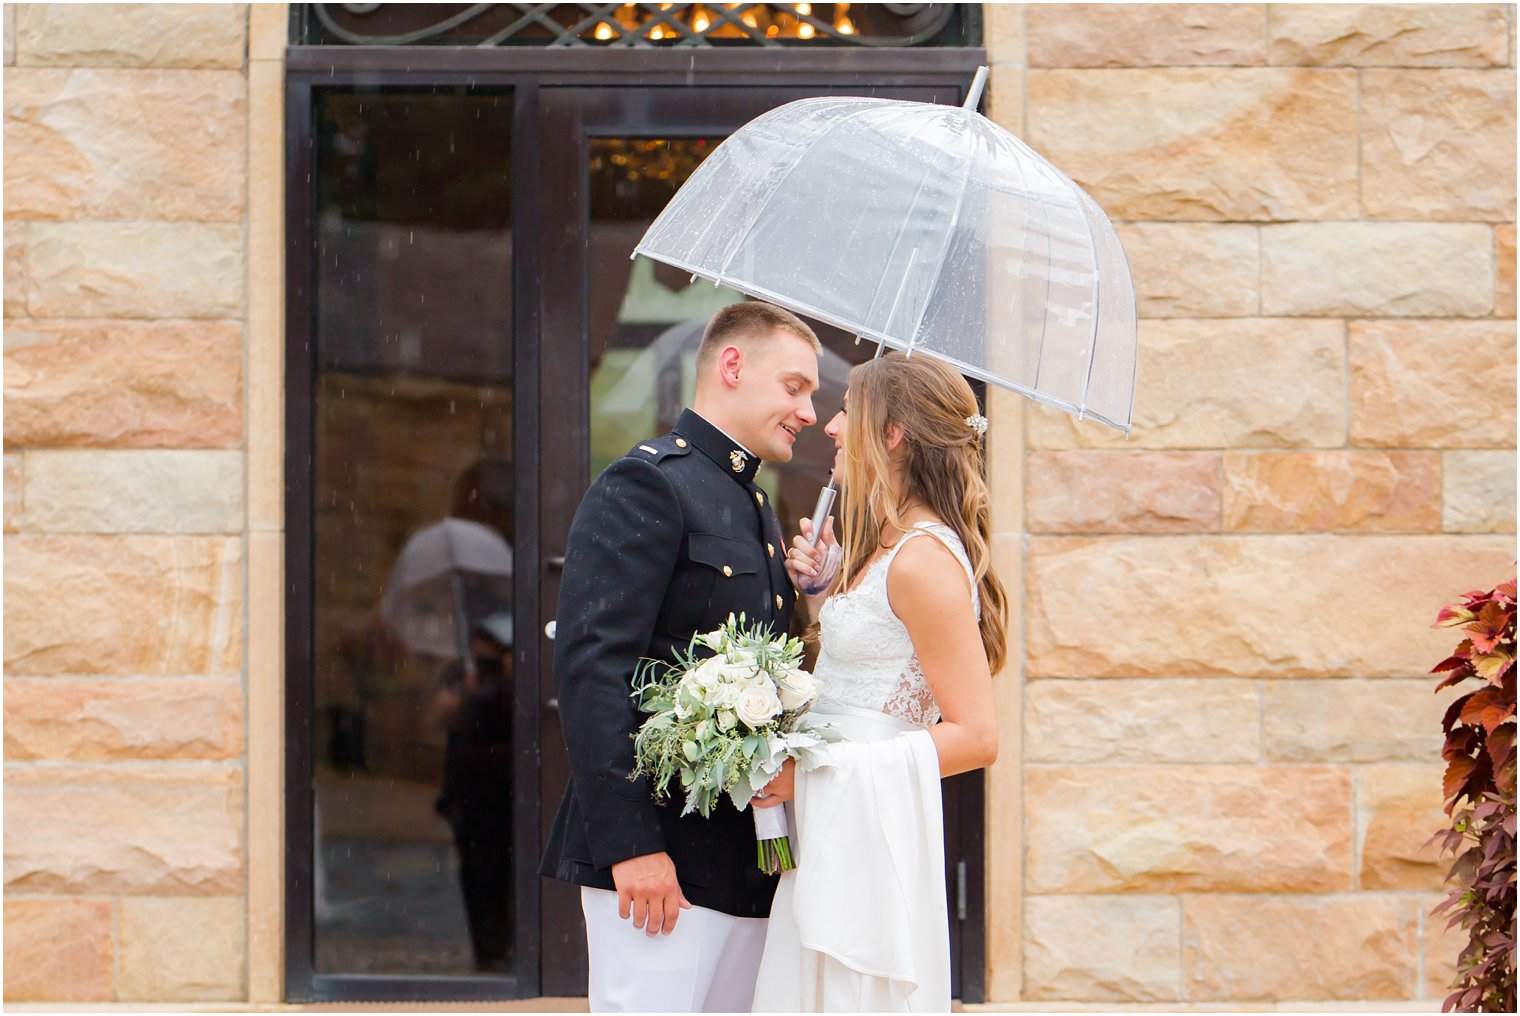 Bride and groom pose under umbrella on rainy wedding day at Jasna Polana